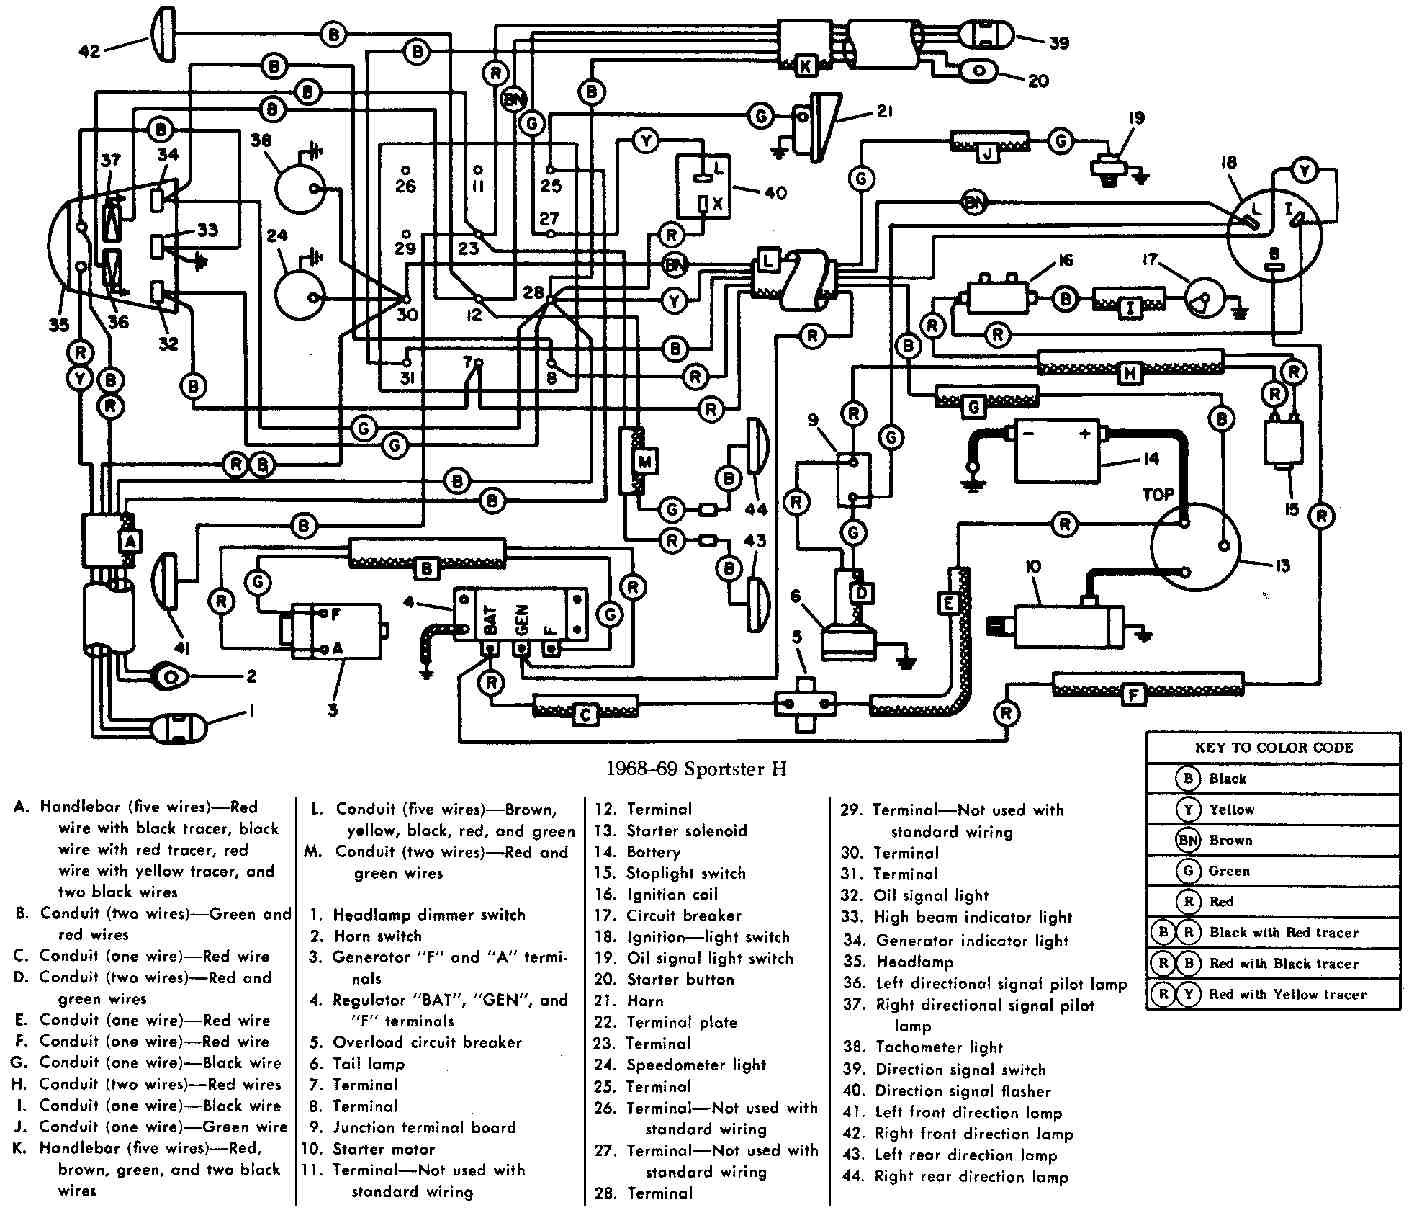 Harley Davidson Ignition Switch Diagram Free Download Wiring Diagram